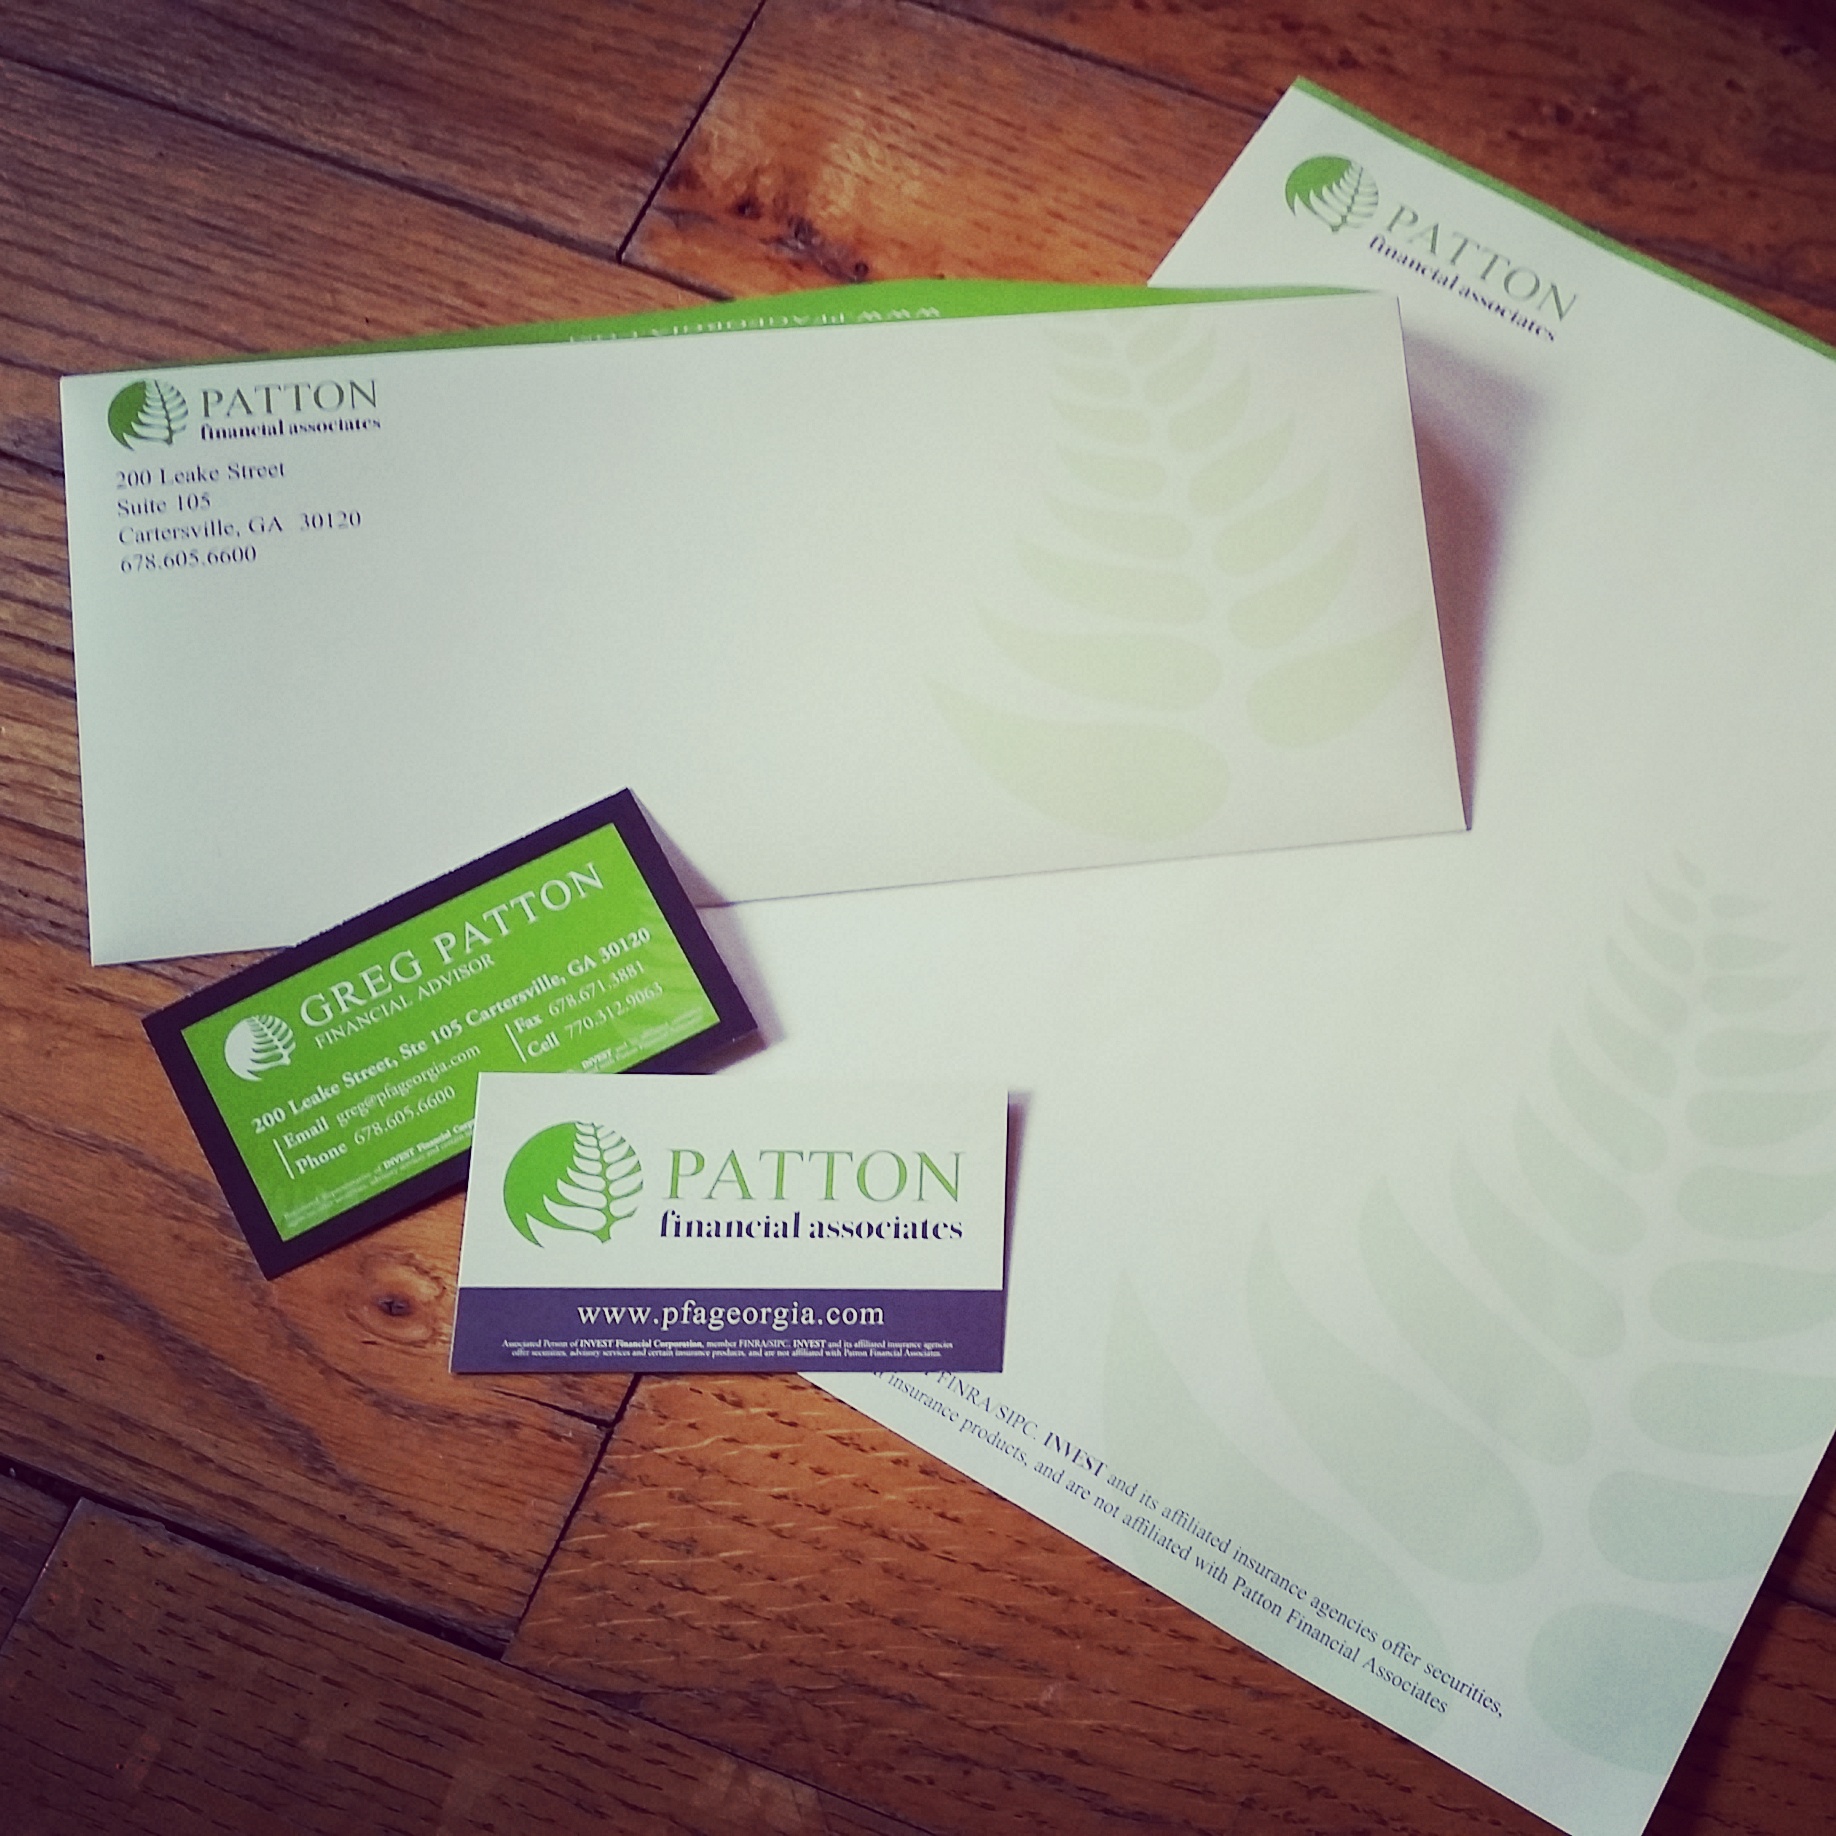 Patton Financial Associates Business Card, Letterhead, and Envelope Design